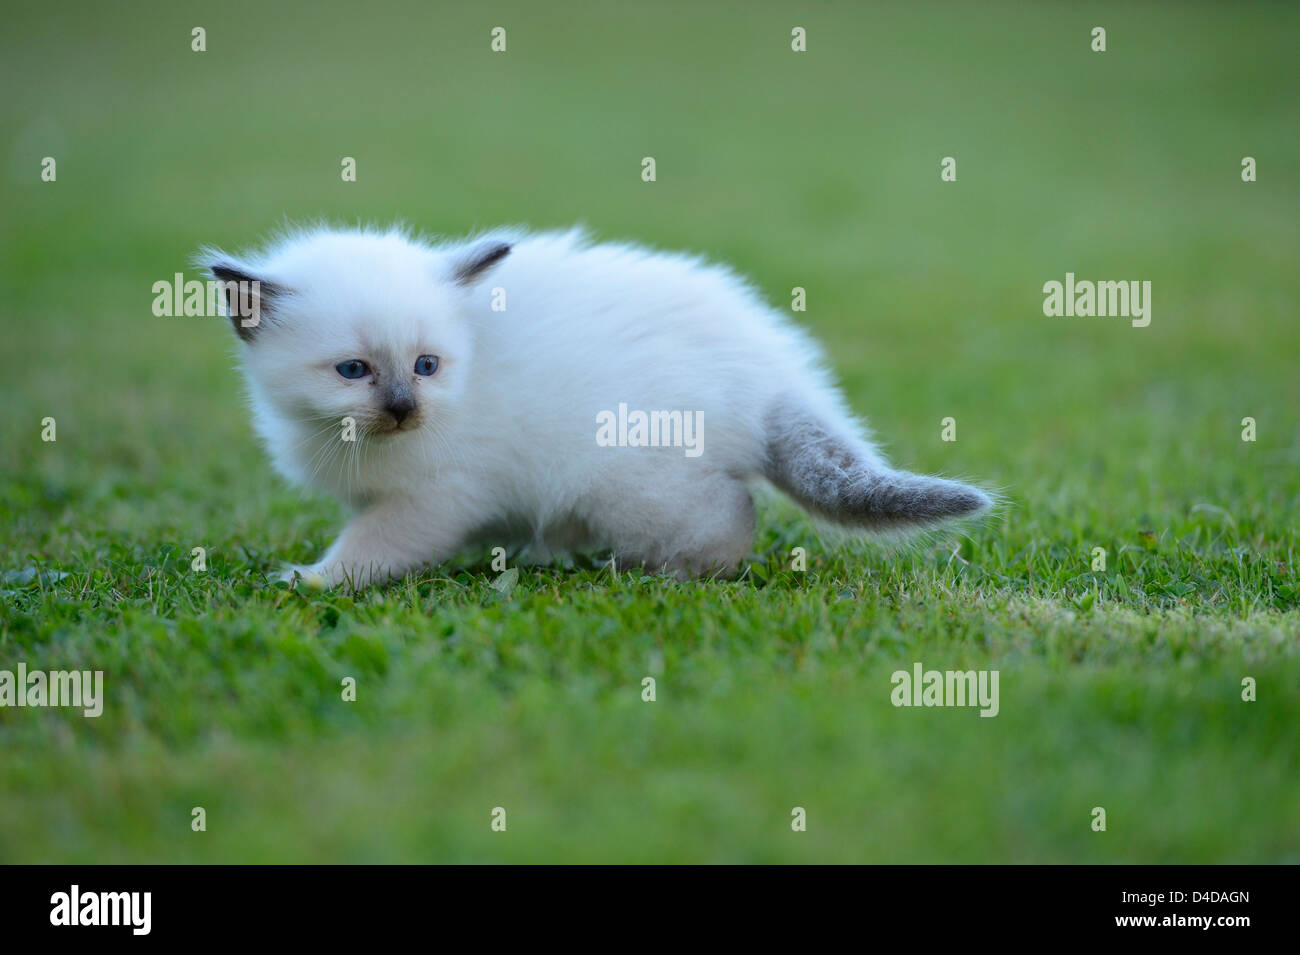 Young Birman cat on lawn Stock Photo